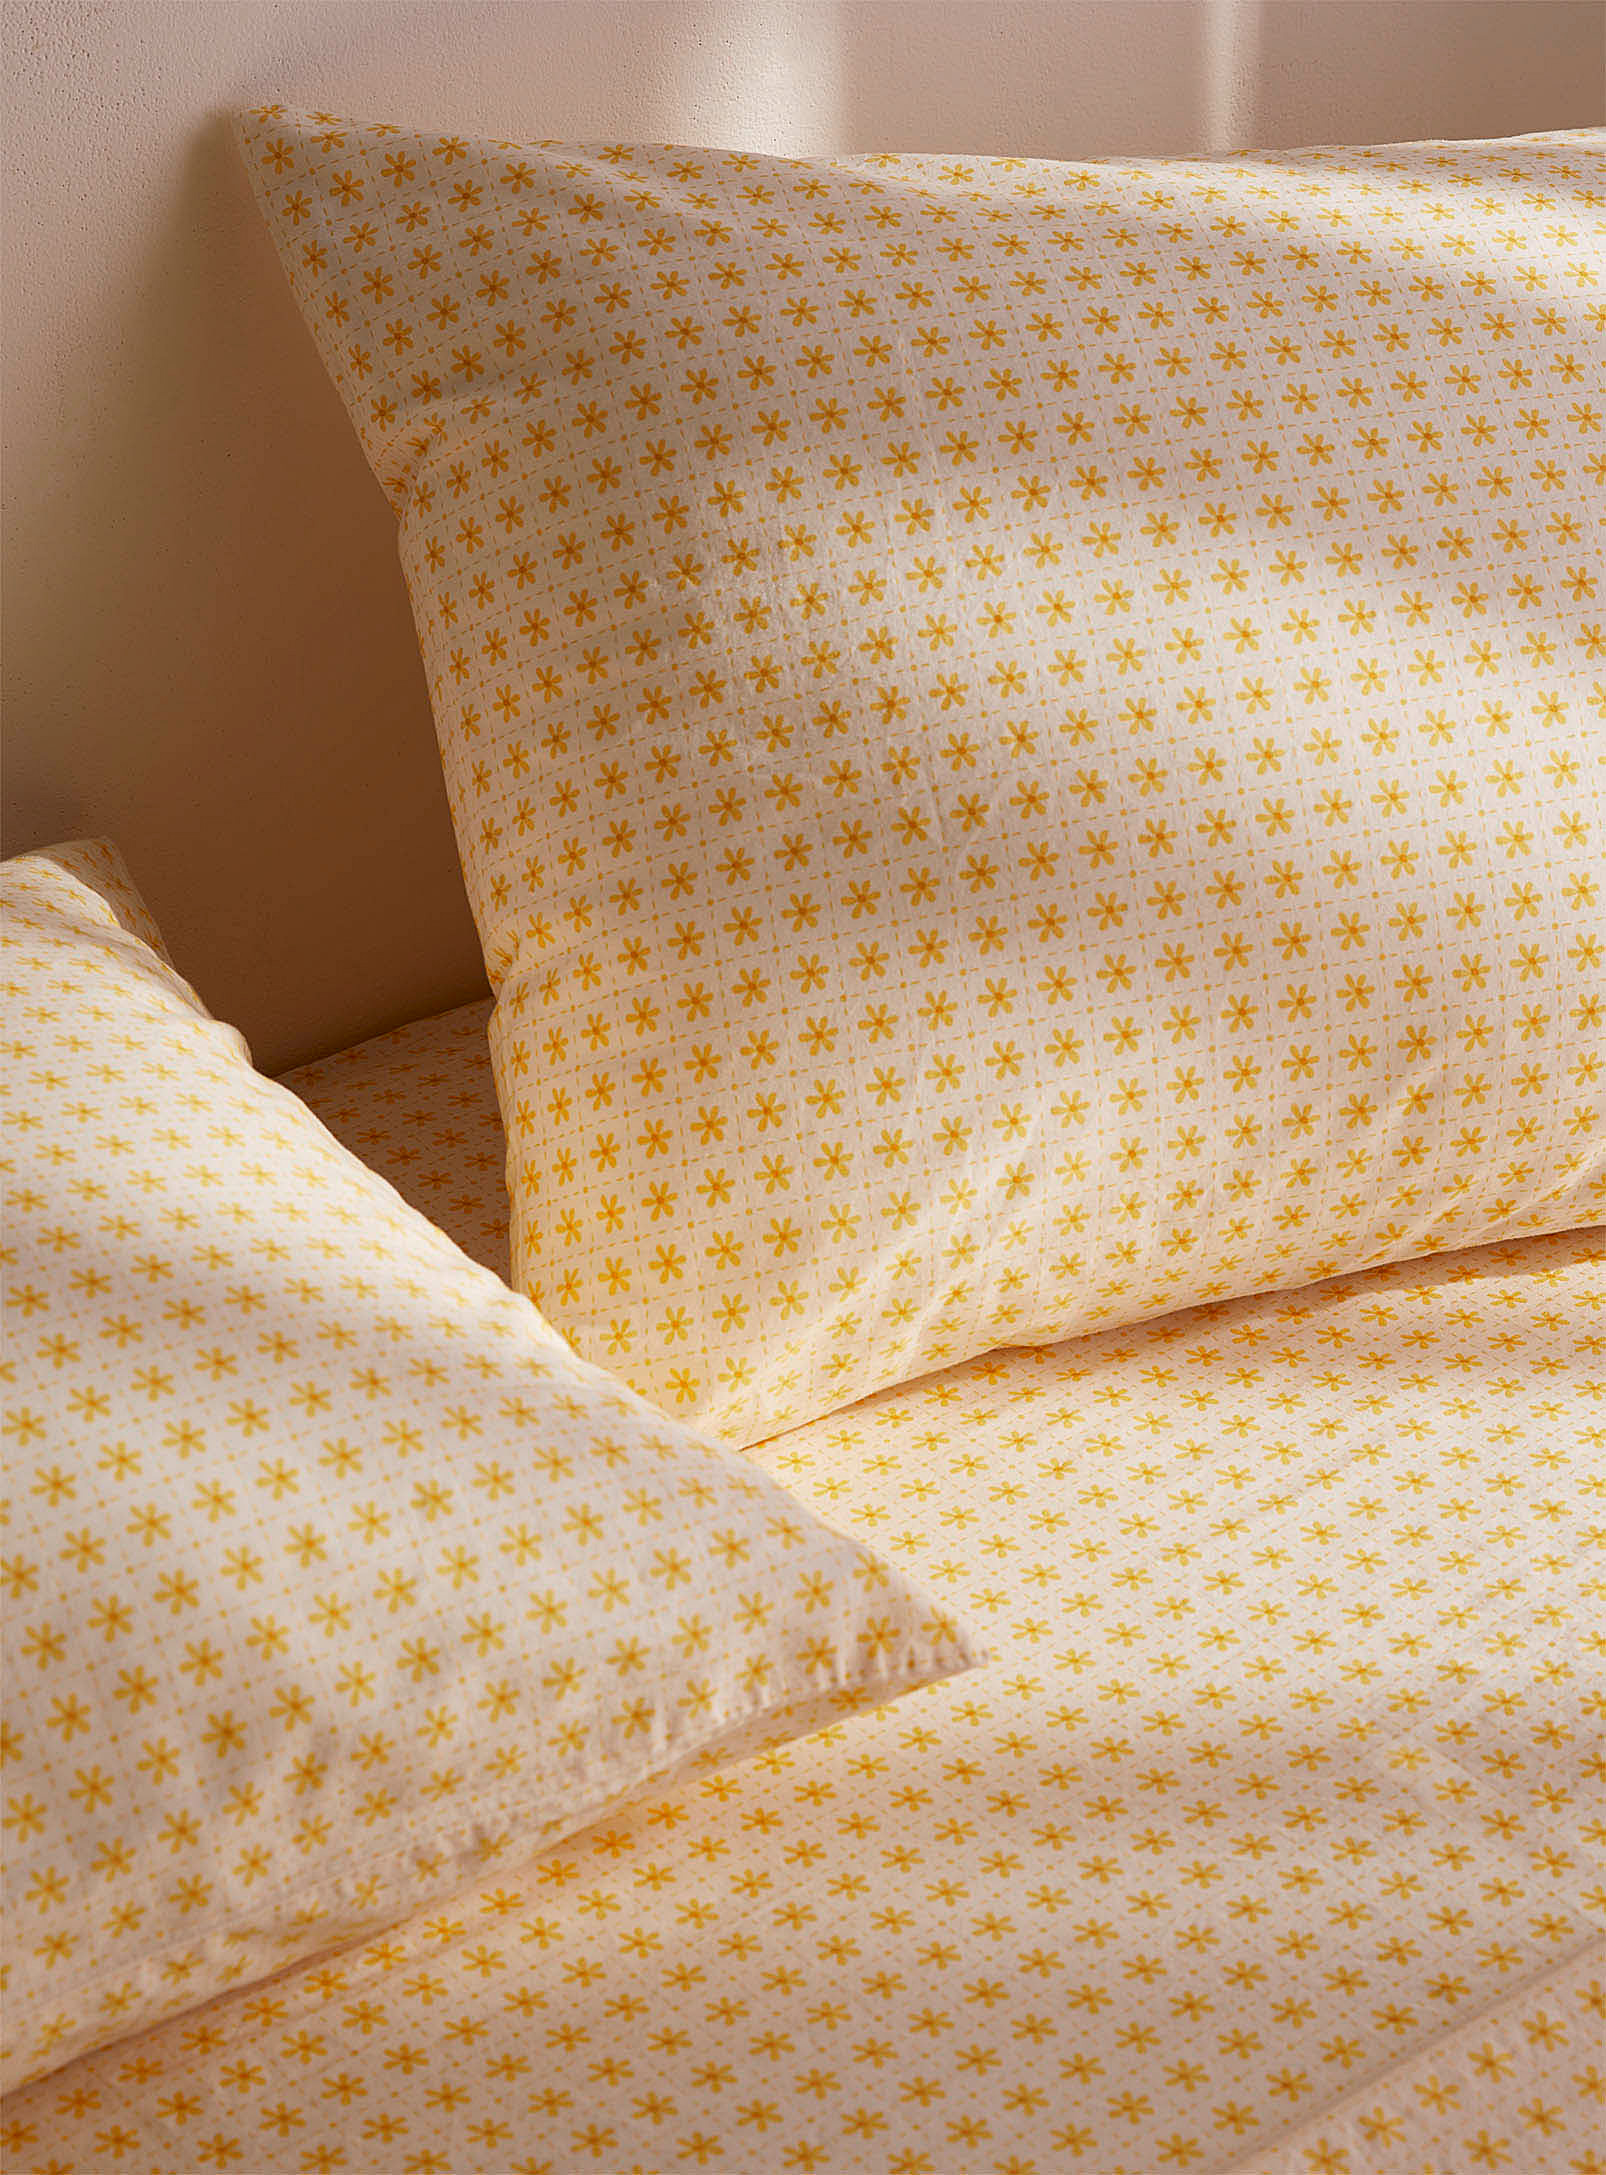 Simons Maison - Retro daisies sheet set Fits mattresses up to 16